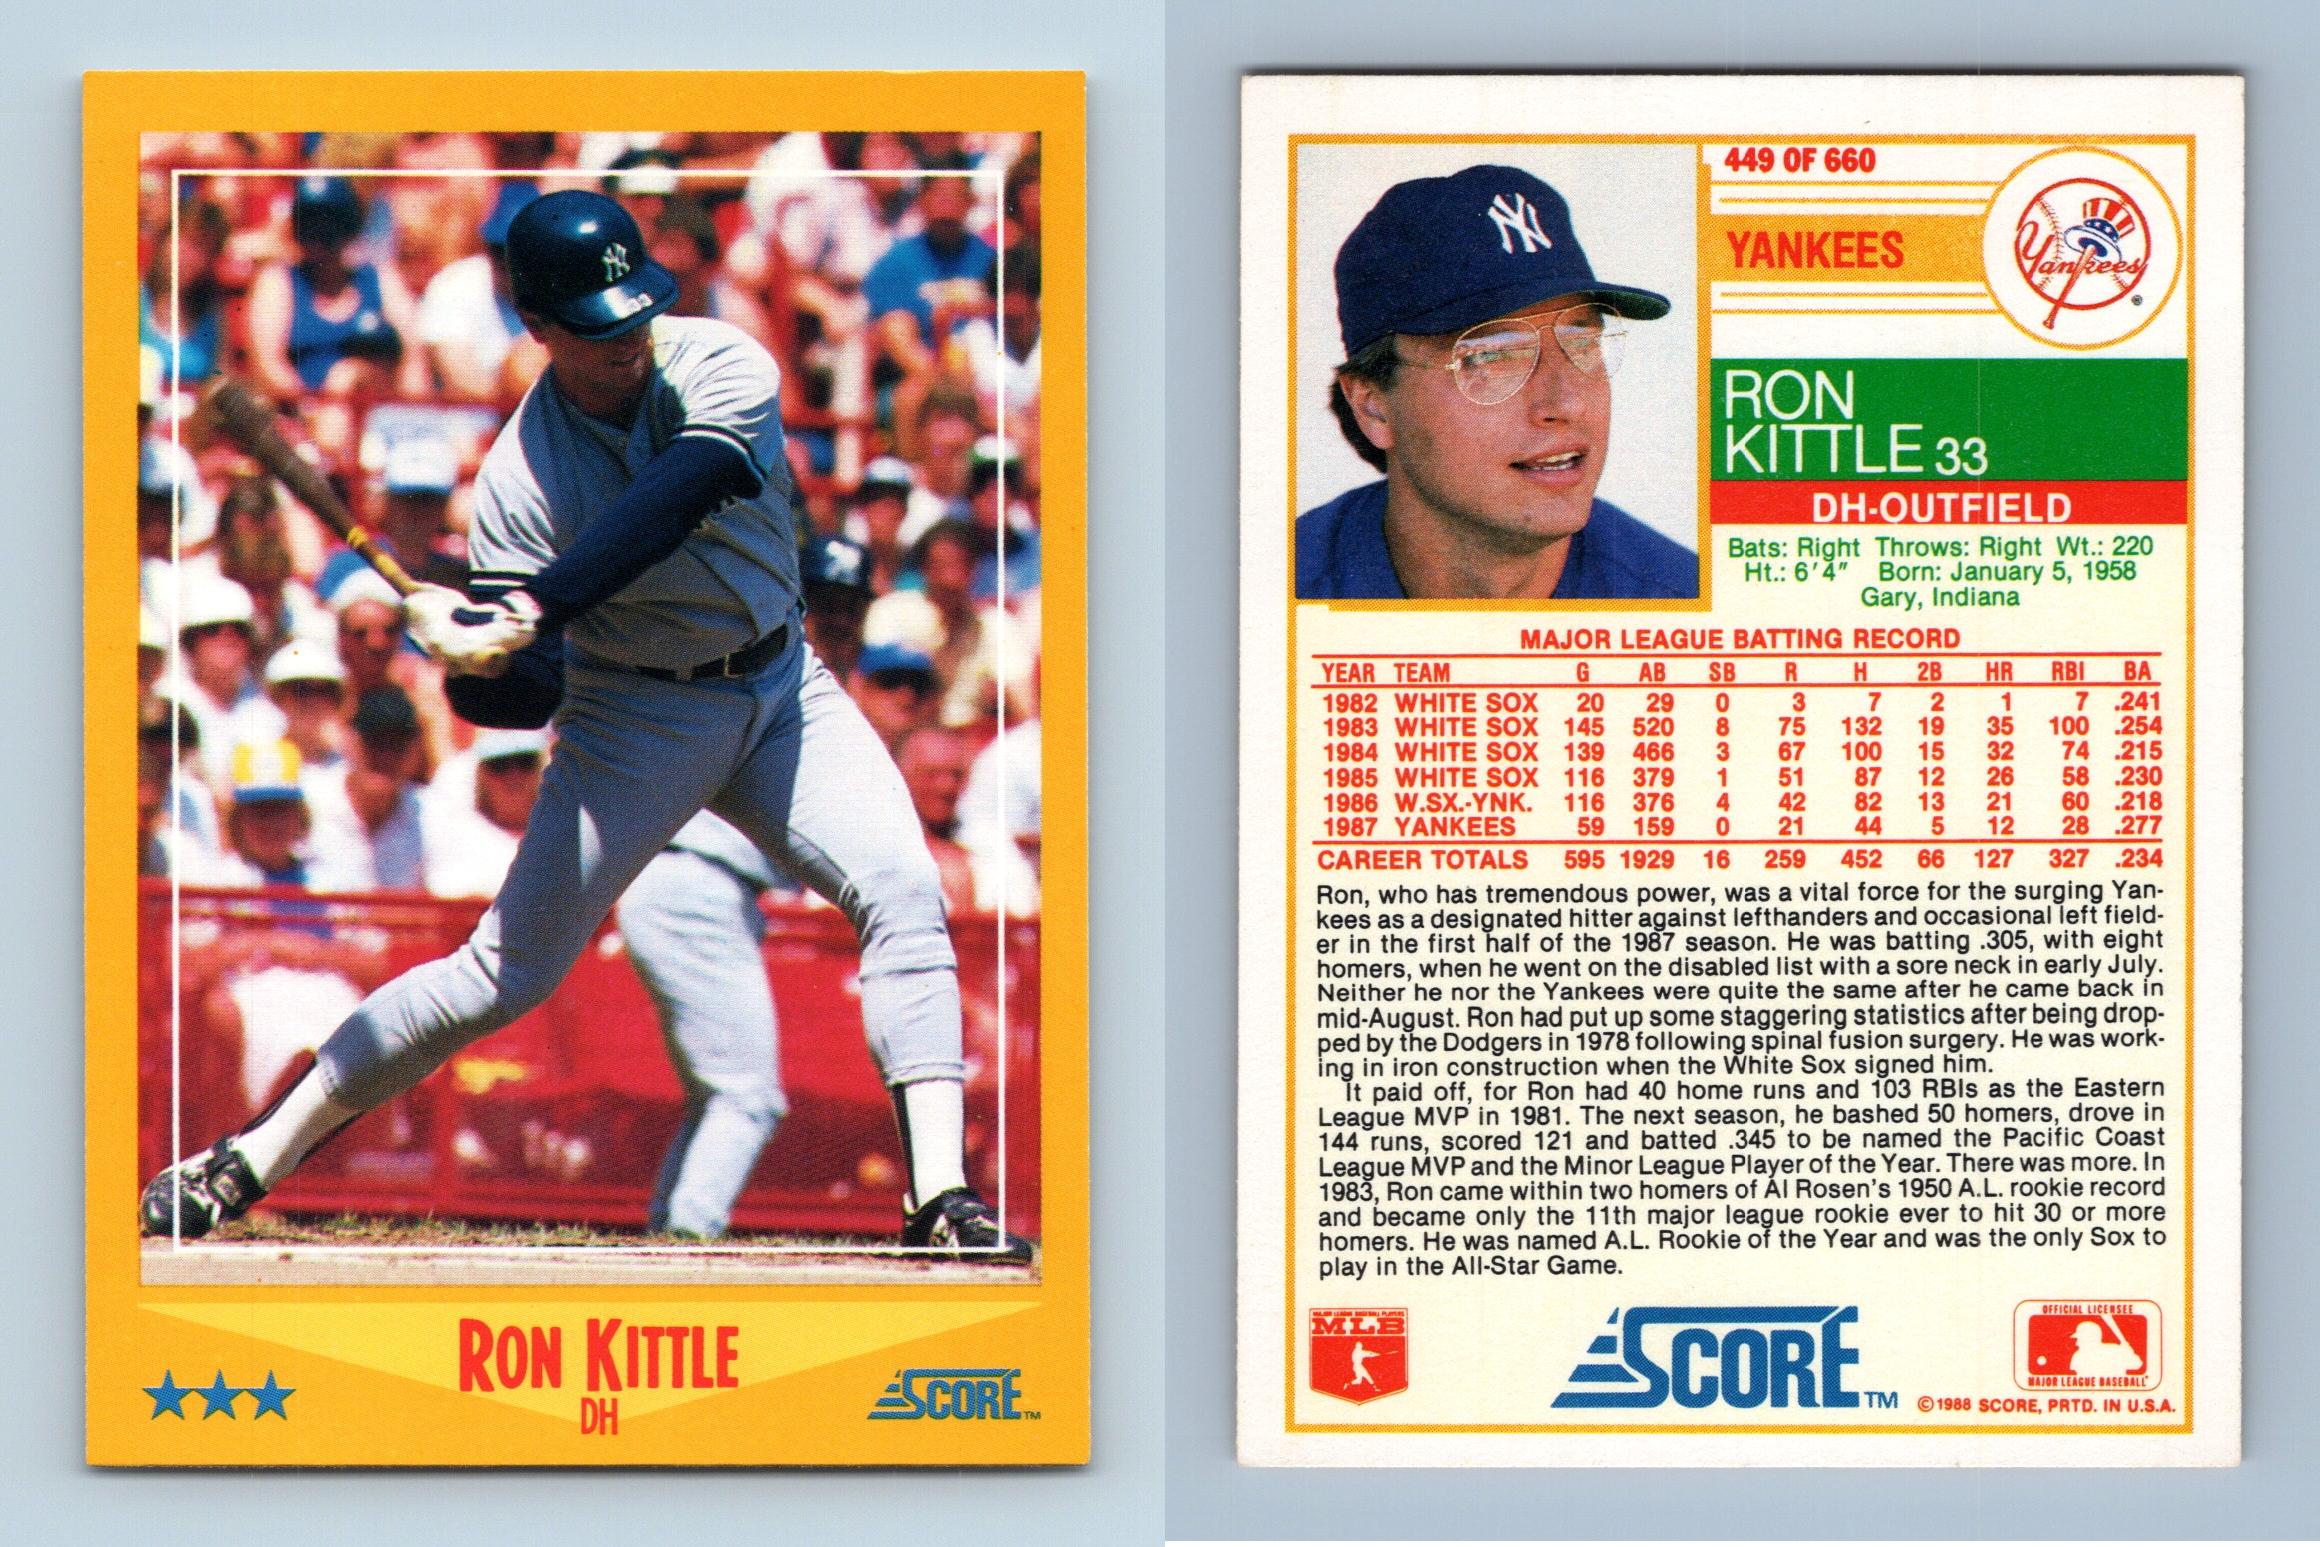 Ron Kittle - Yankees #449 Score 1988 Baseball Trading Card